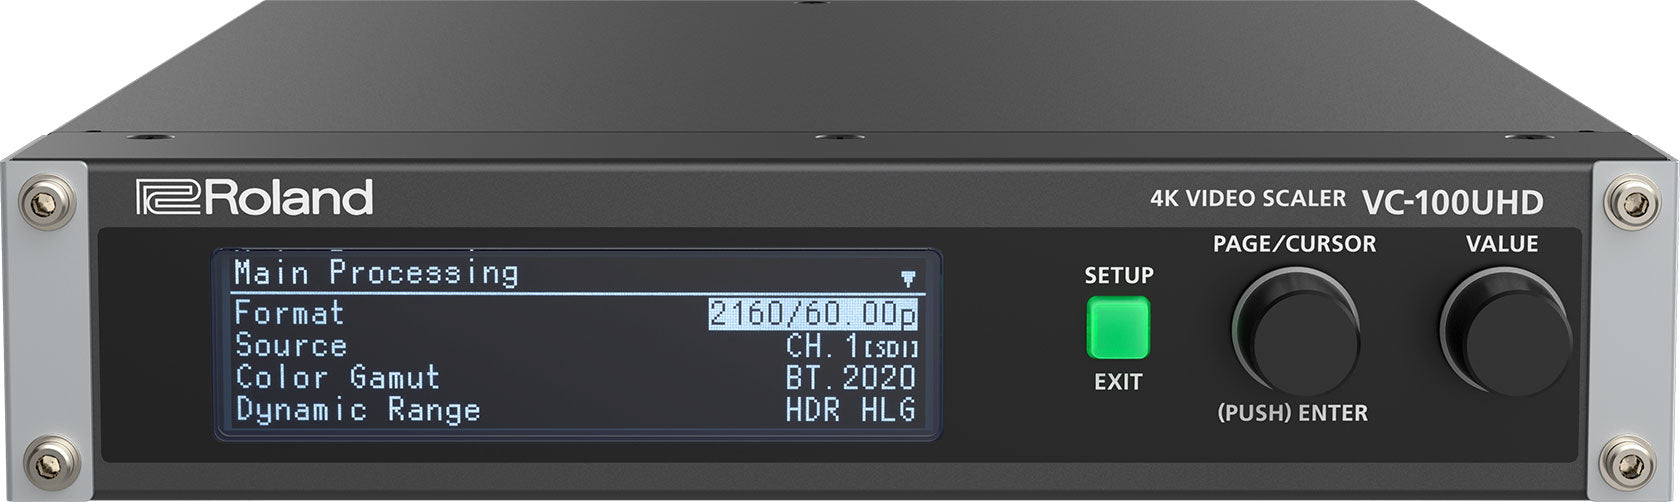 Roland VC-100UHD 4K Video Scaler